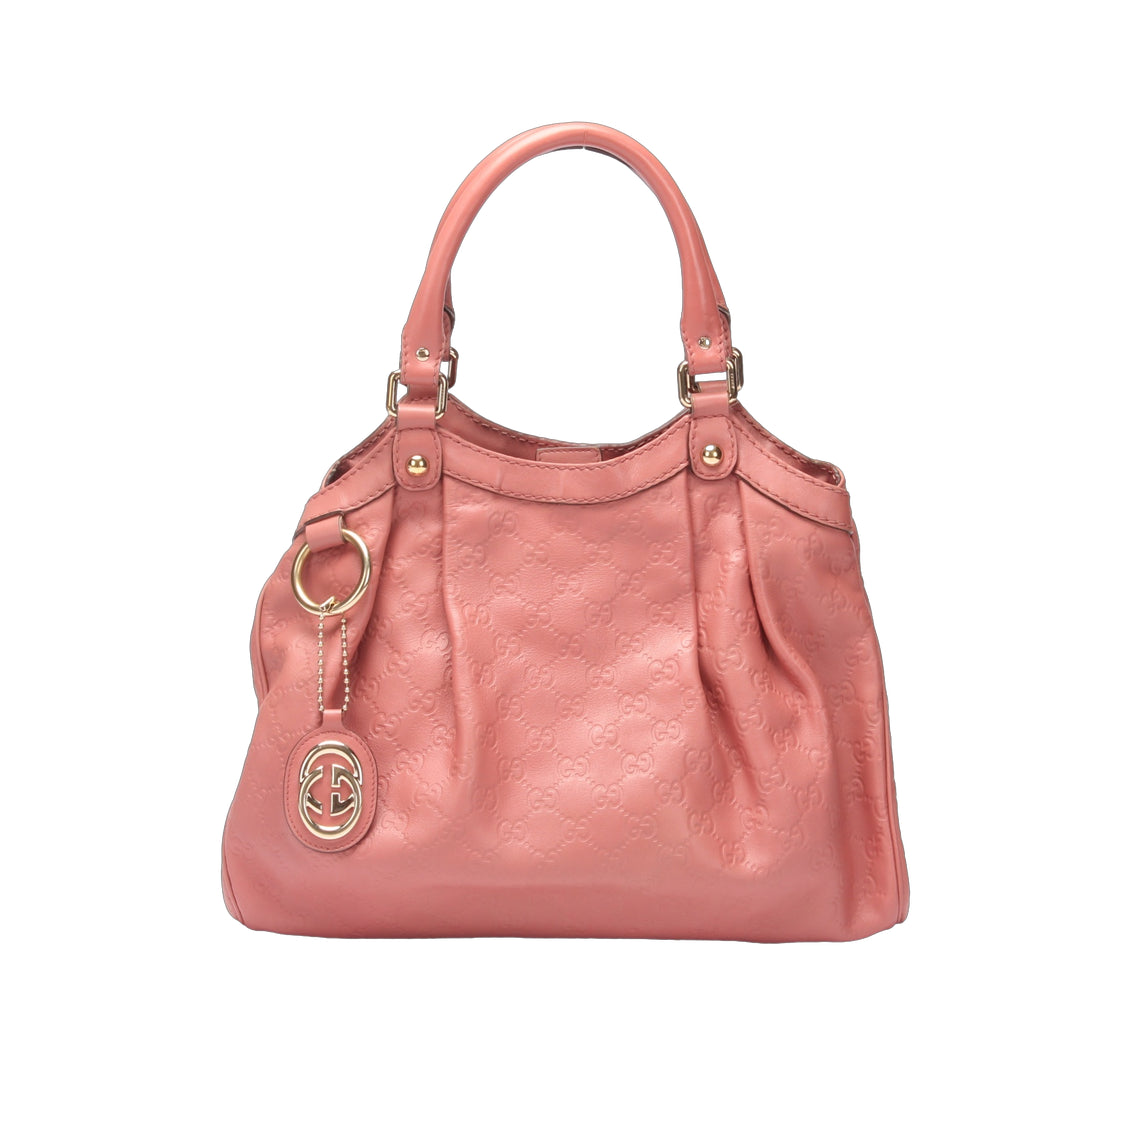 Guccissima Leather Sukey Handbag 211944